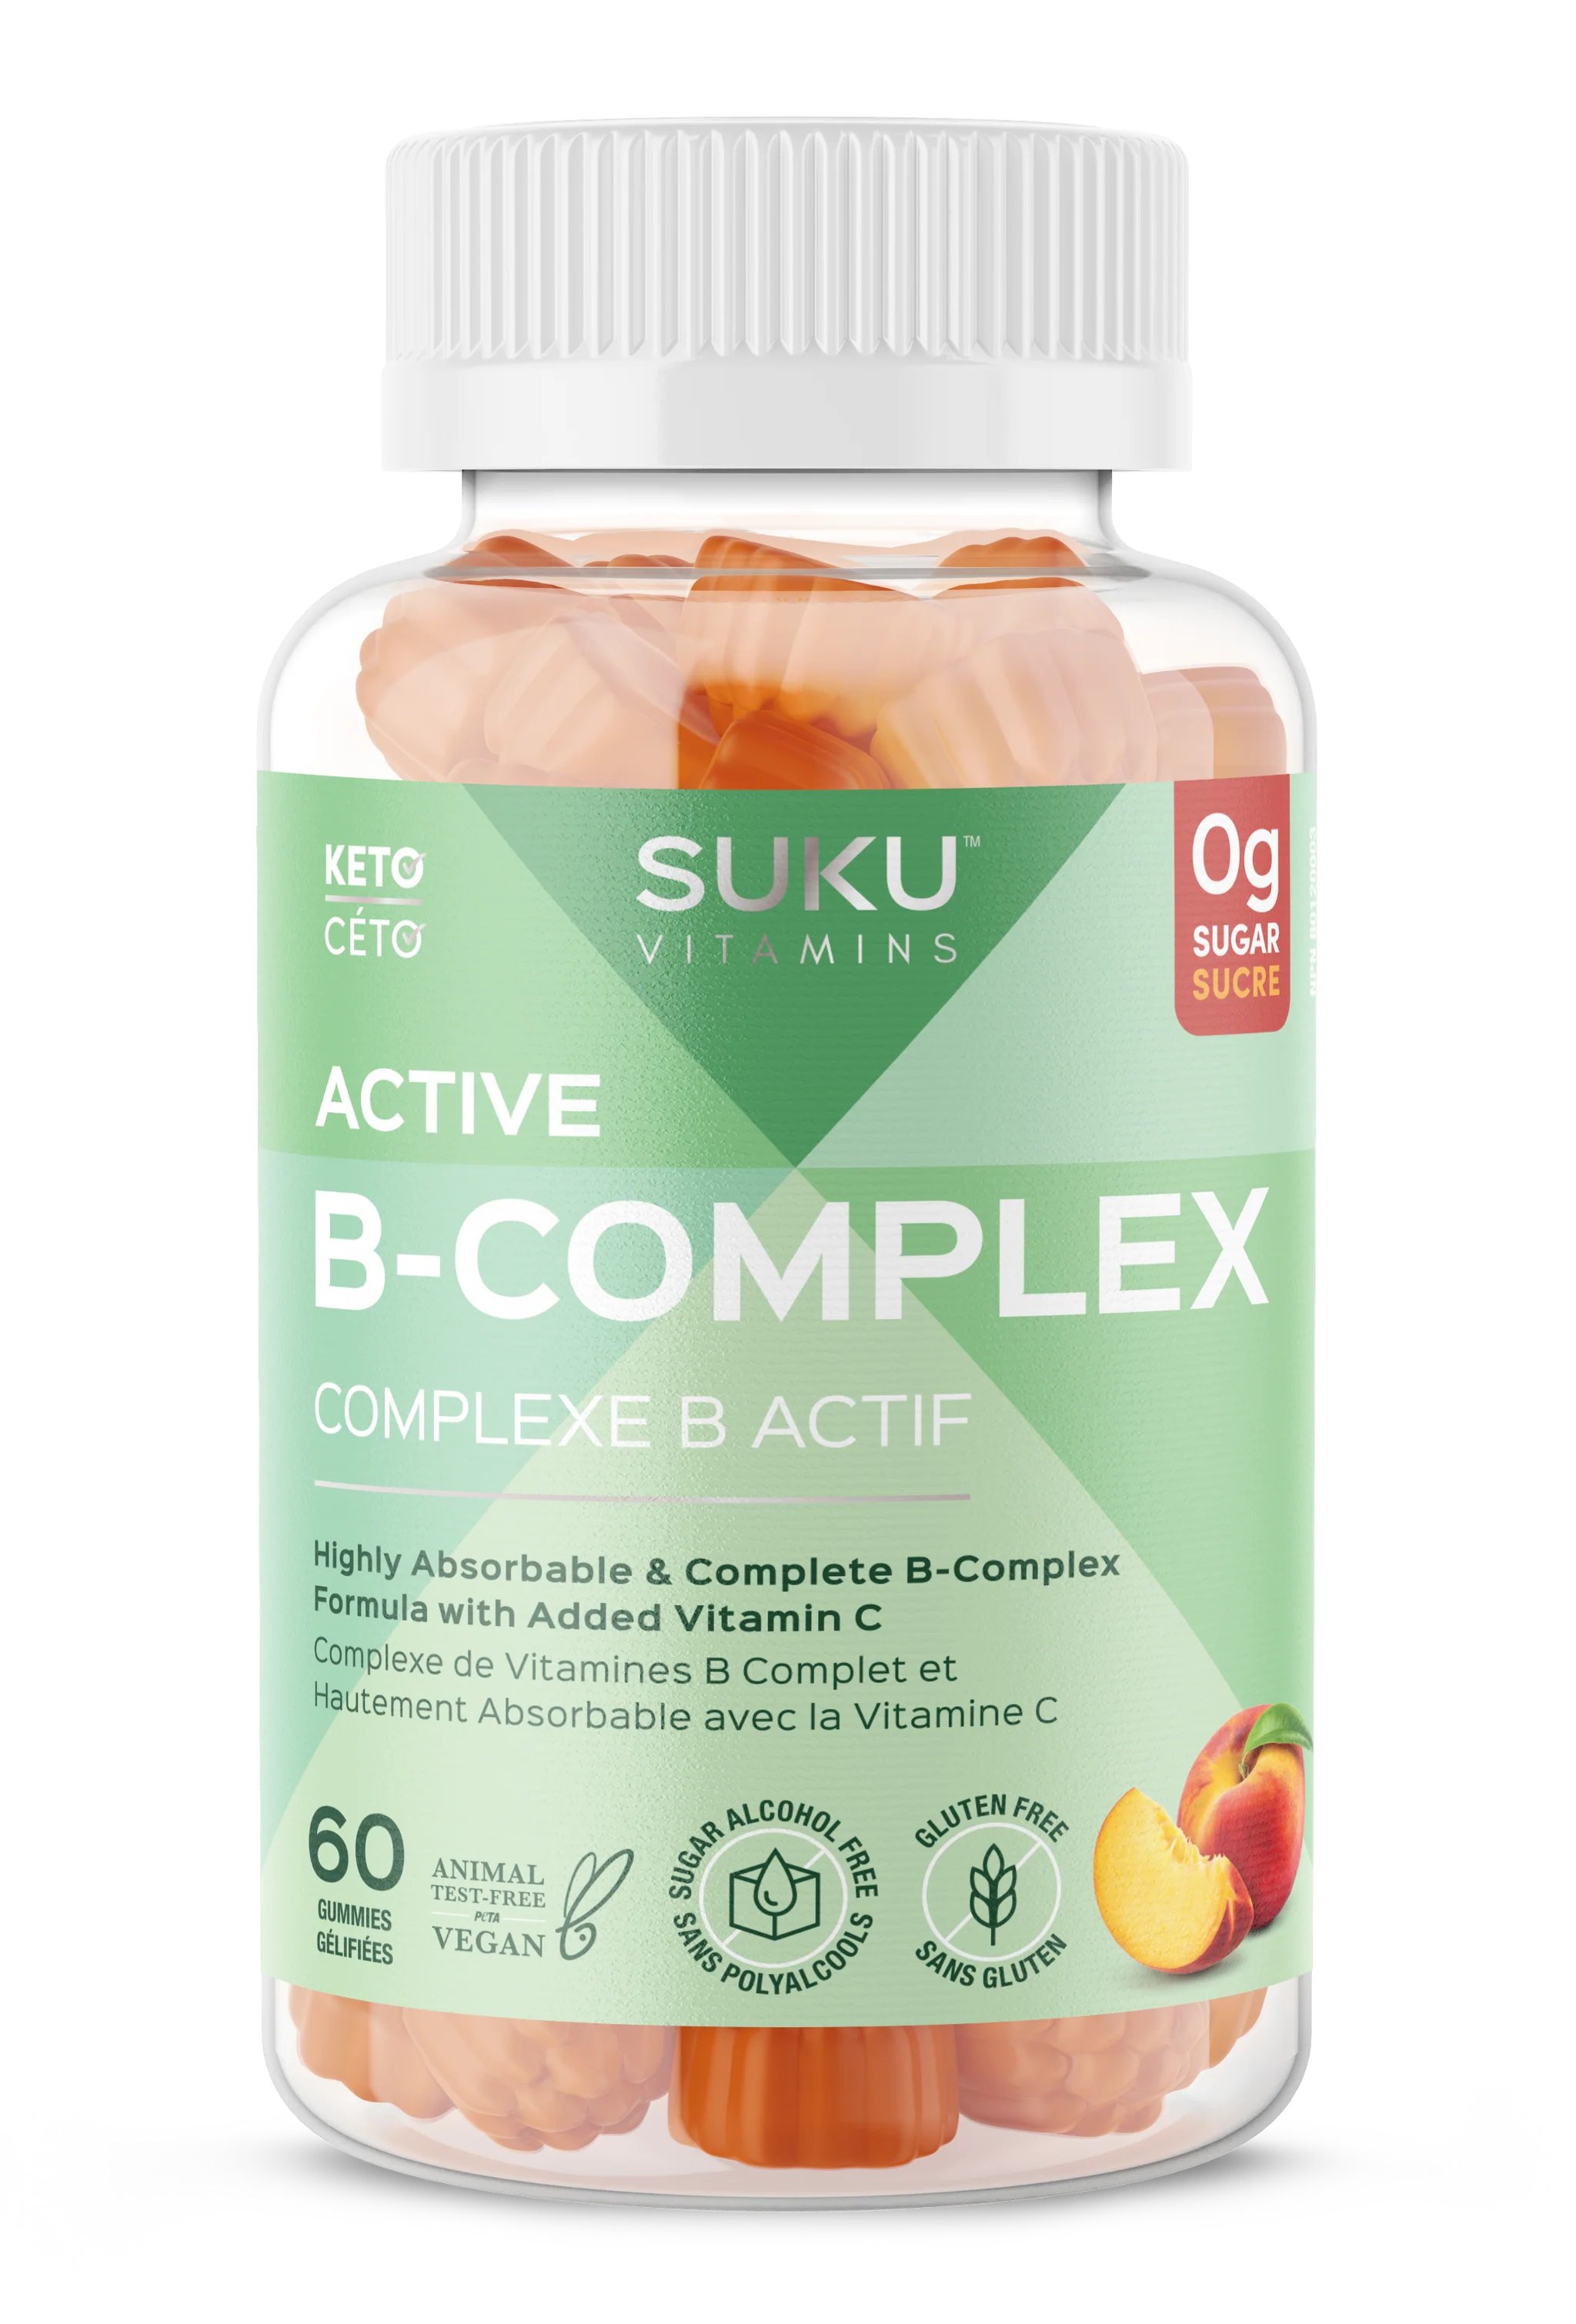 Active B-Complex - Complexe B Actif